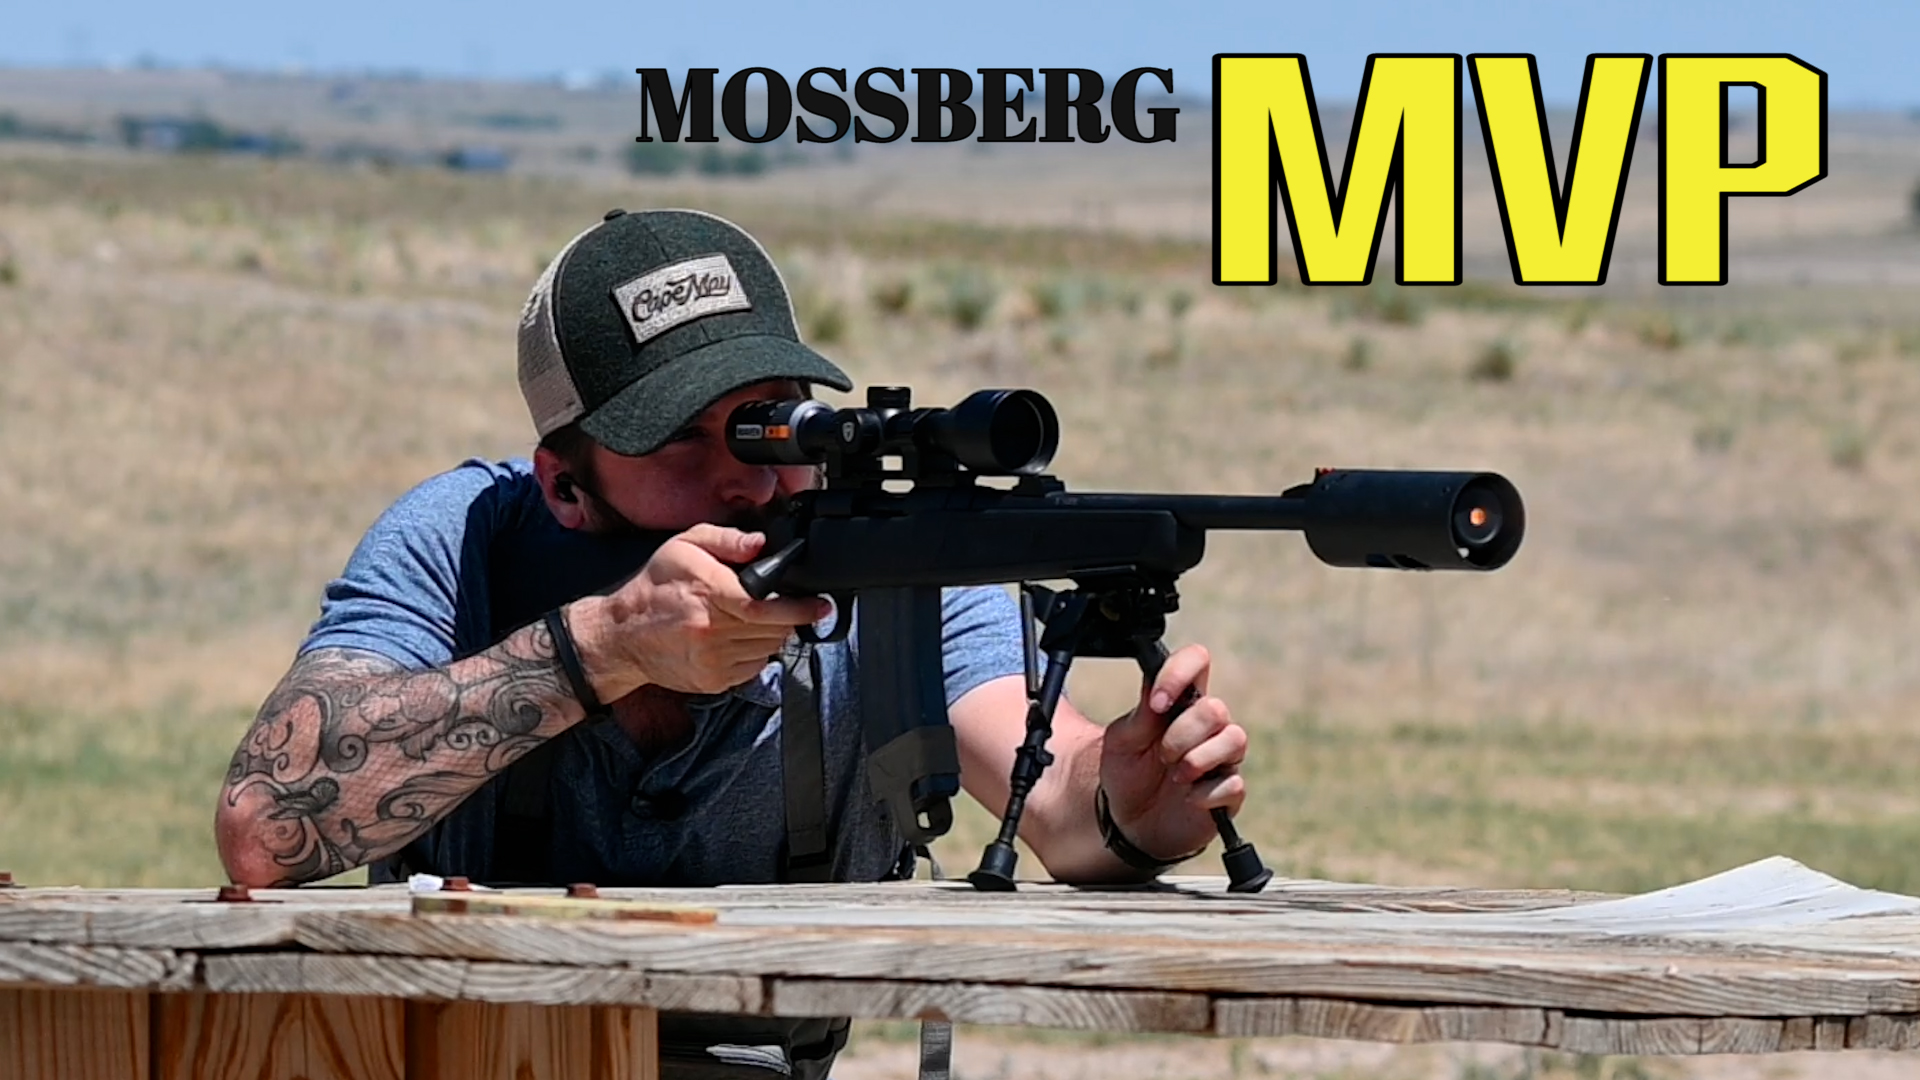 Mossberg MVP Patrol Rifle